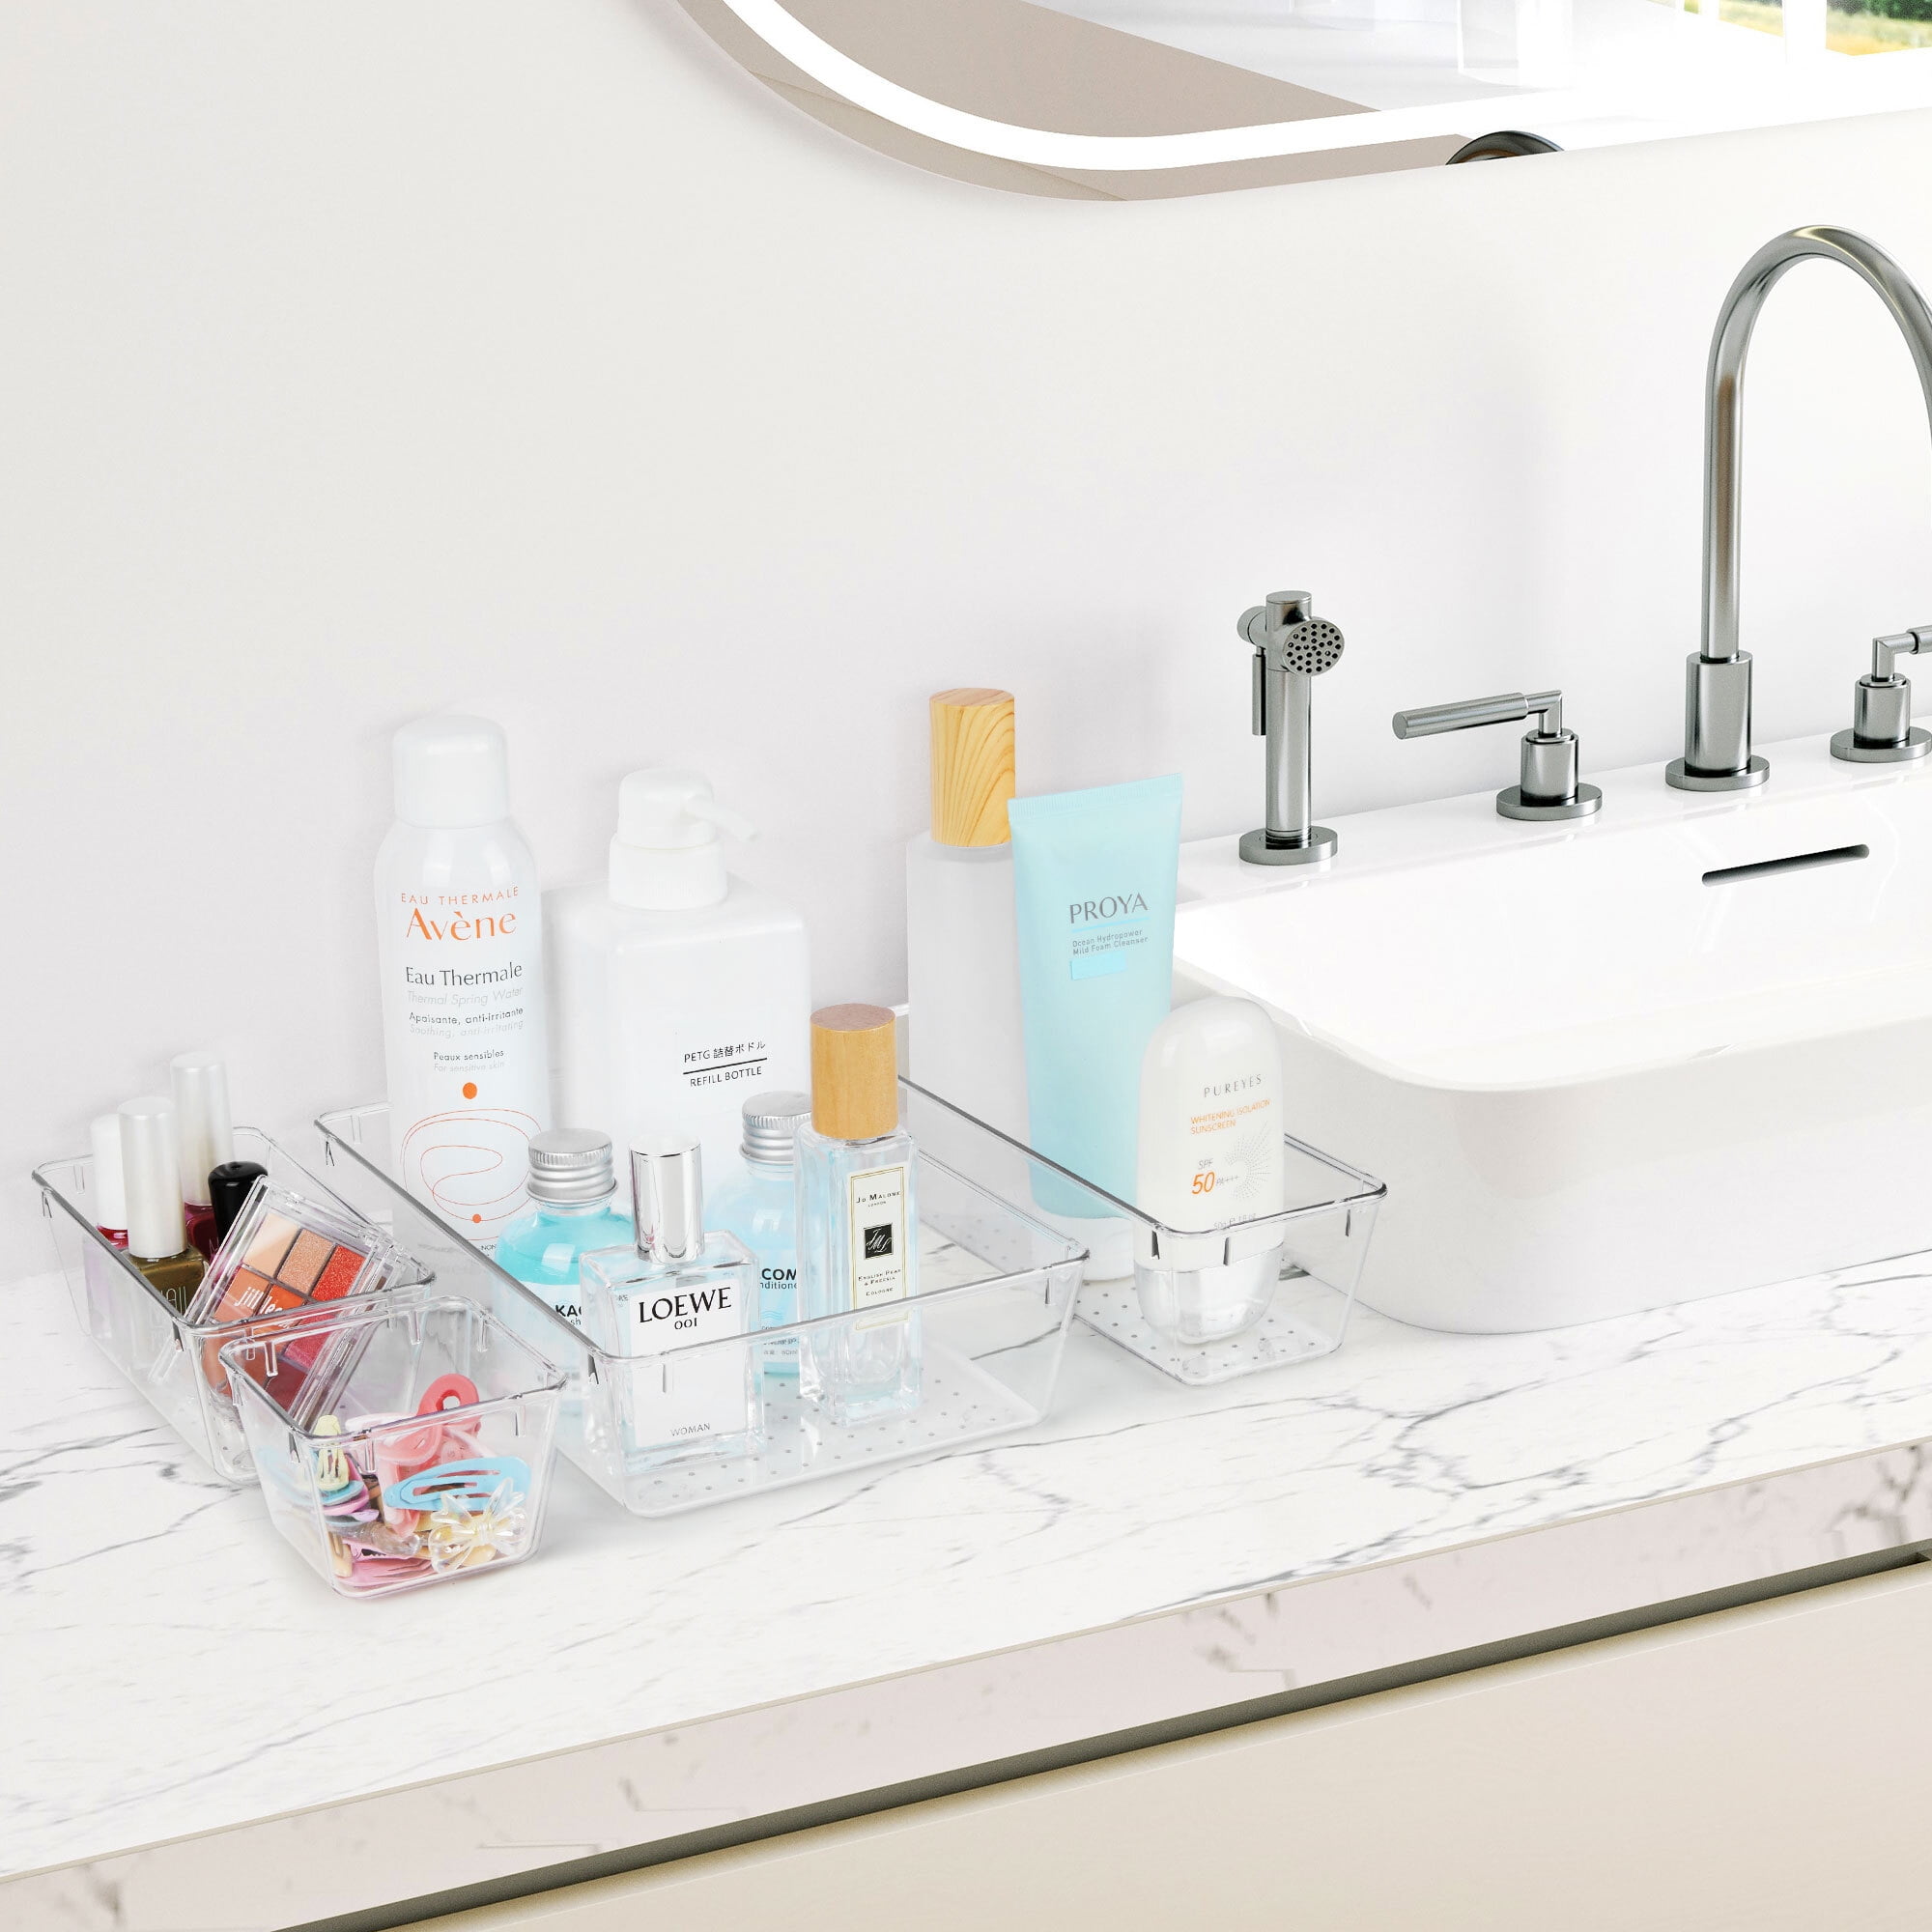 Lifewit 25 Pcs Drawer Organizer Set Clear Plastic Desk Bathroom Makeup Drawer Organizer, Size: 4 Sizes